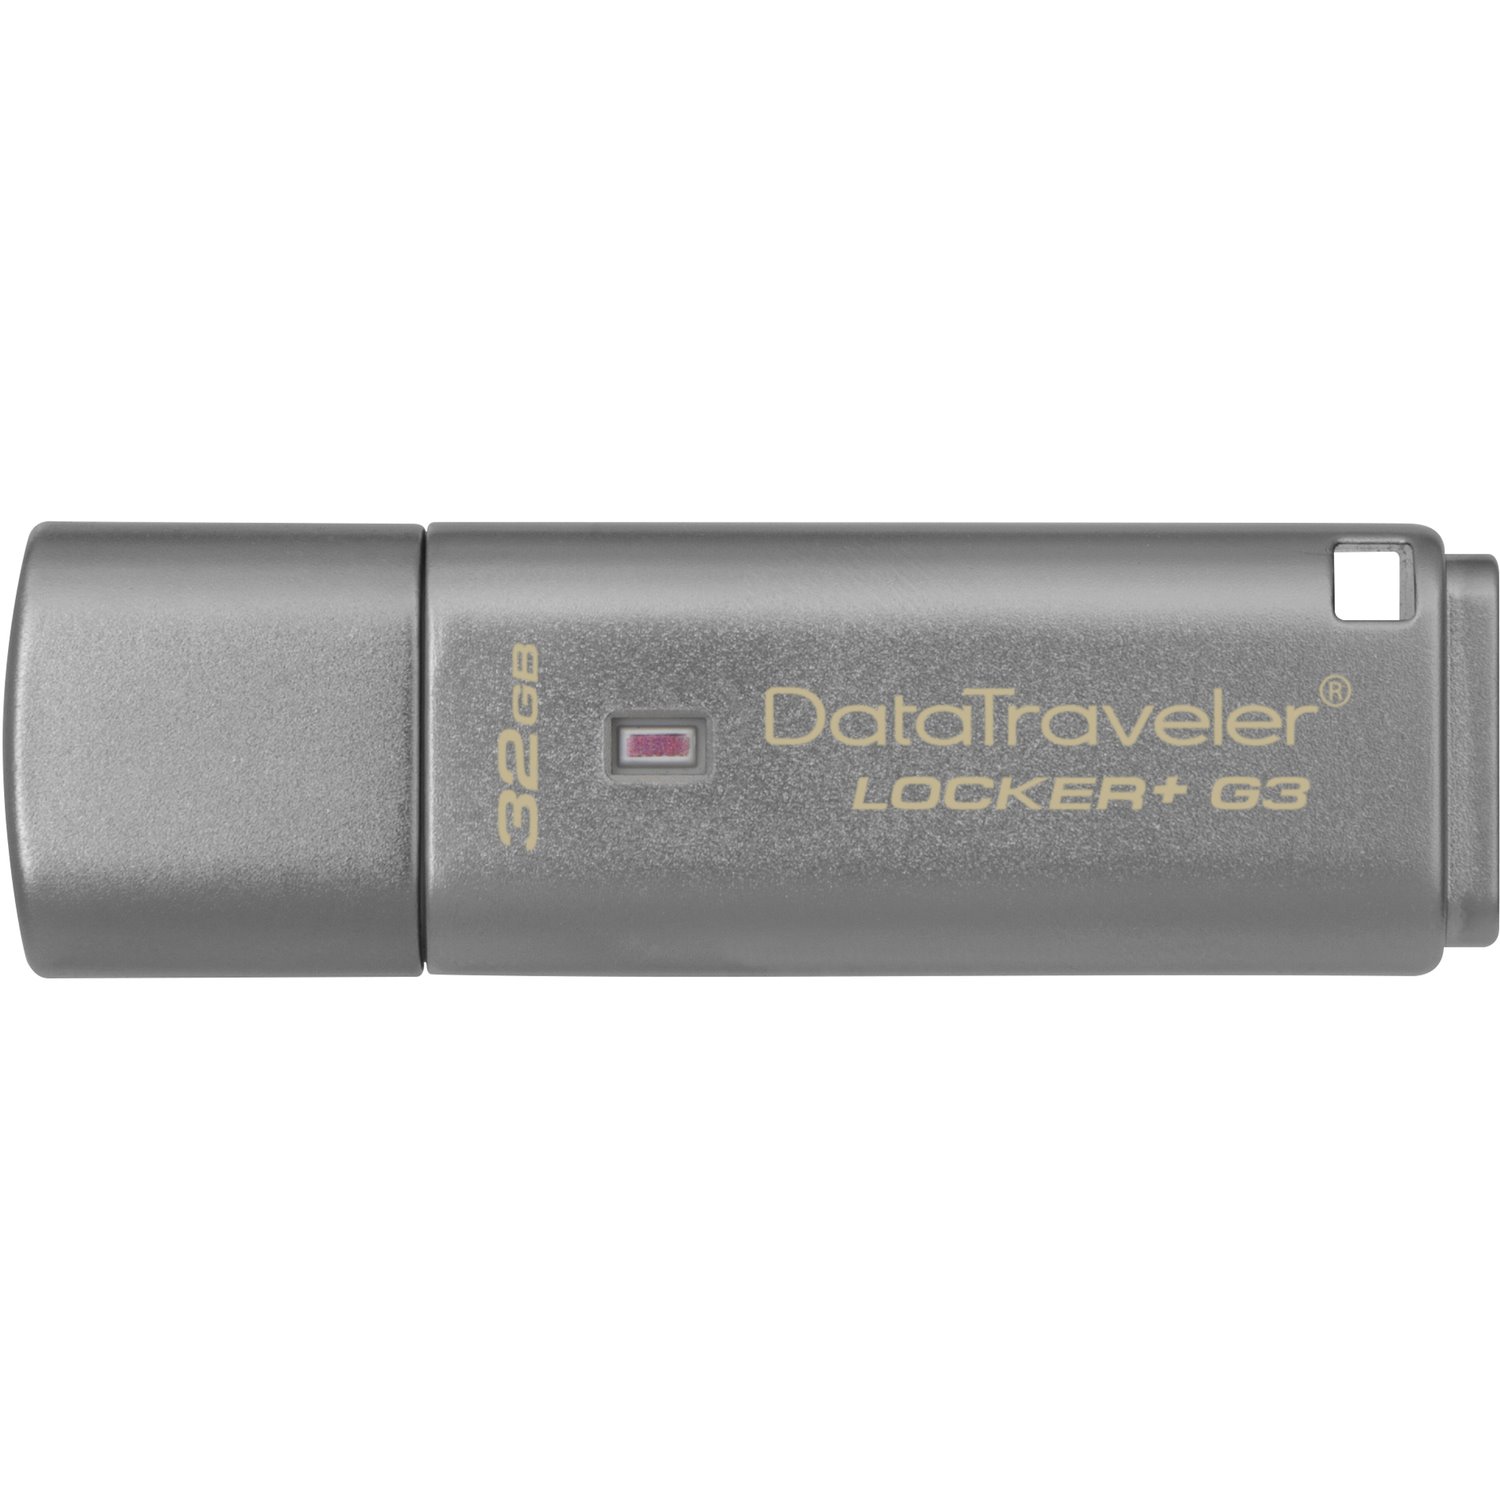 Kingston DataTraveler Locker+ G3 32 GB USB 3.0 Flash Drive - Silver